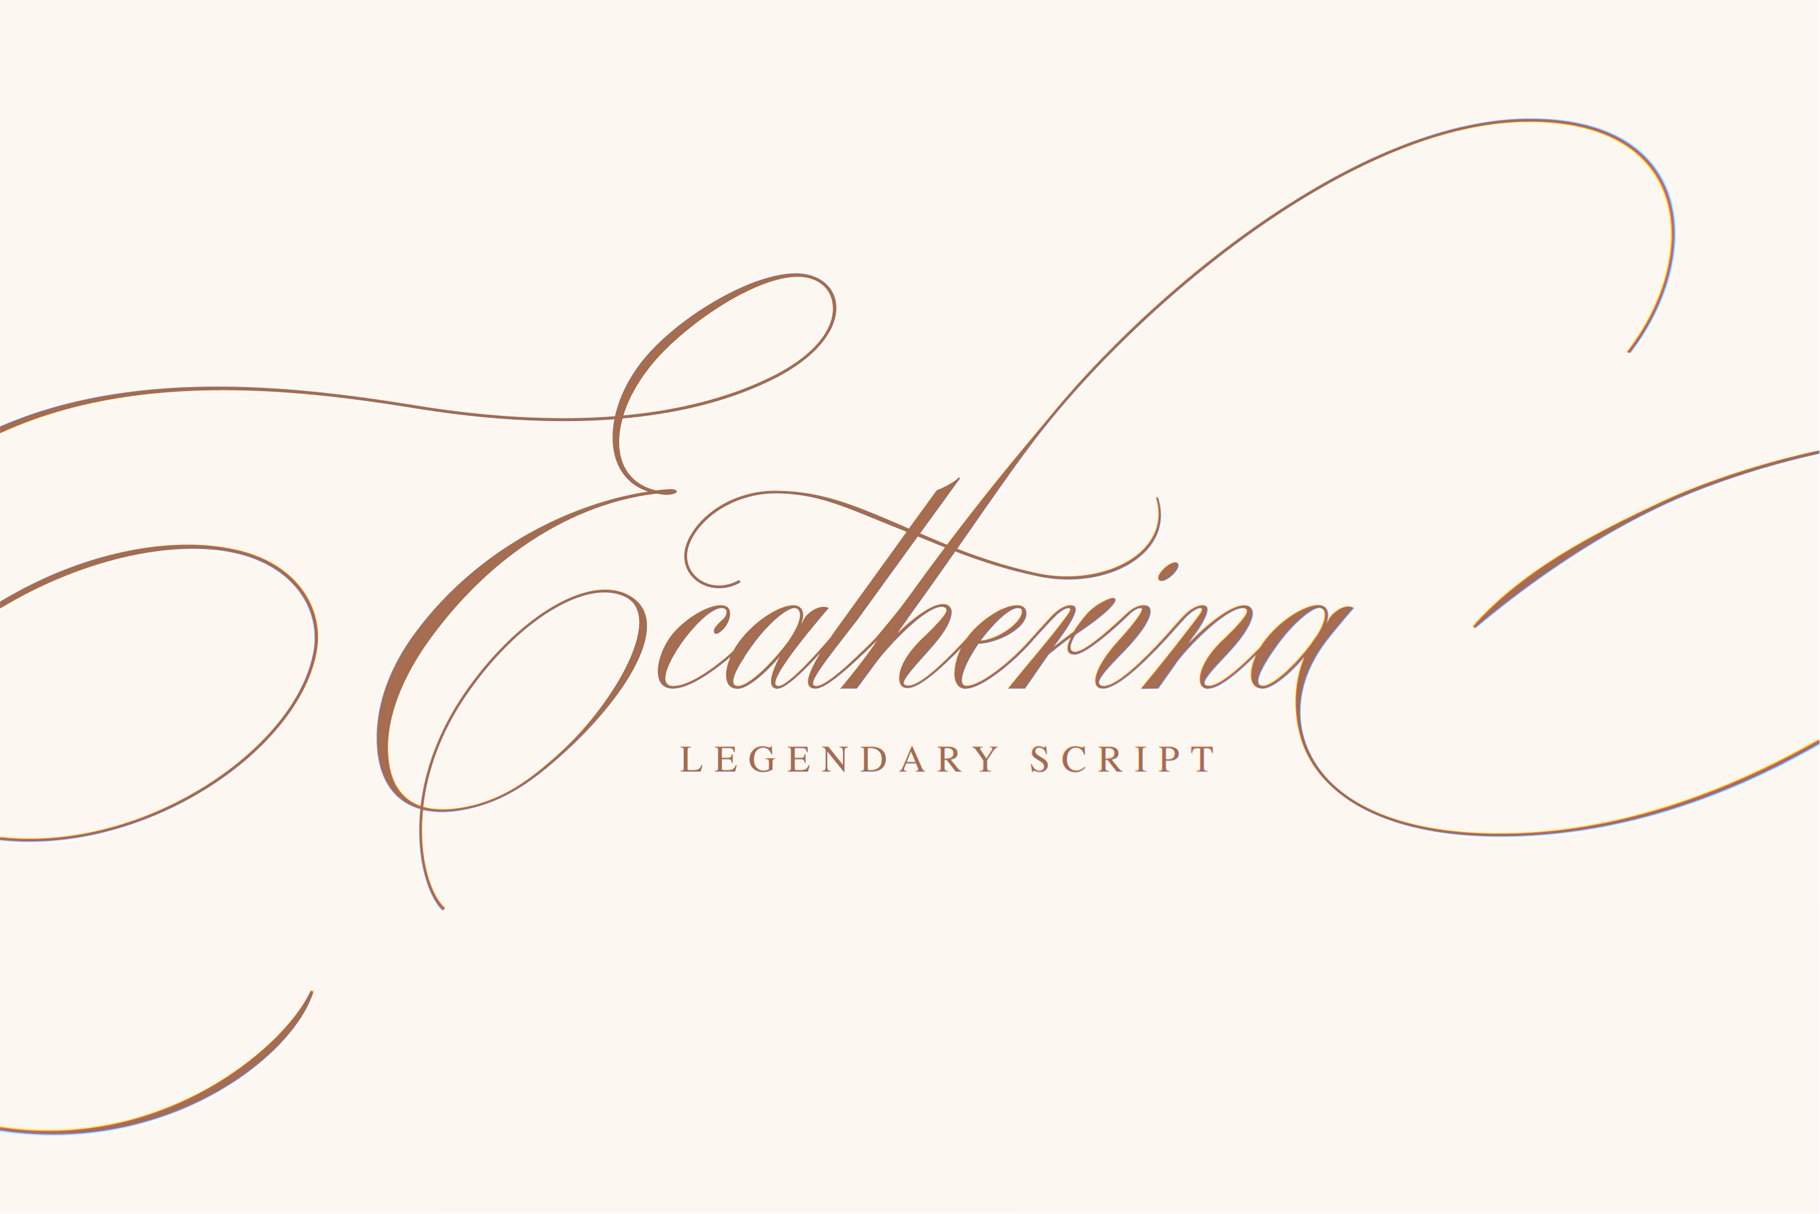 Ecatherina - legendary script cover image.